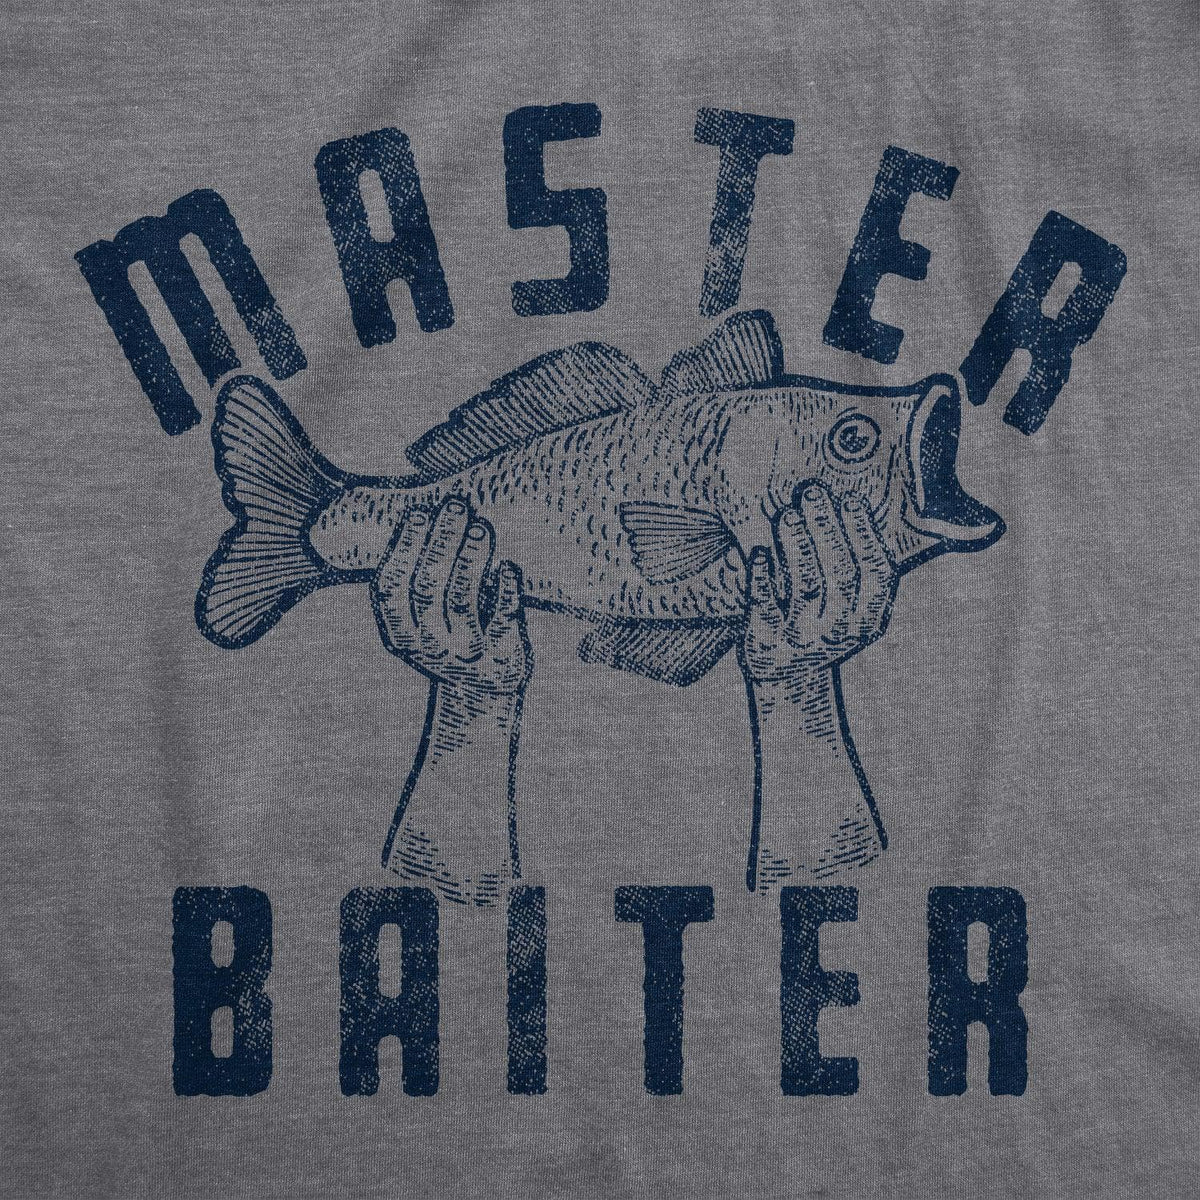 master baiter shirt  Master Baiter Fishing Mens T Shirt Size S-XXL